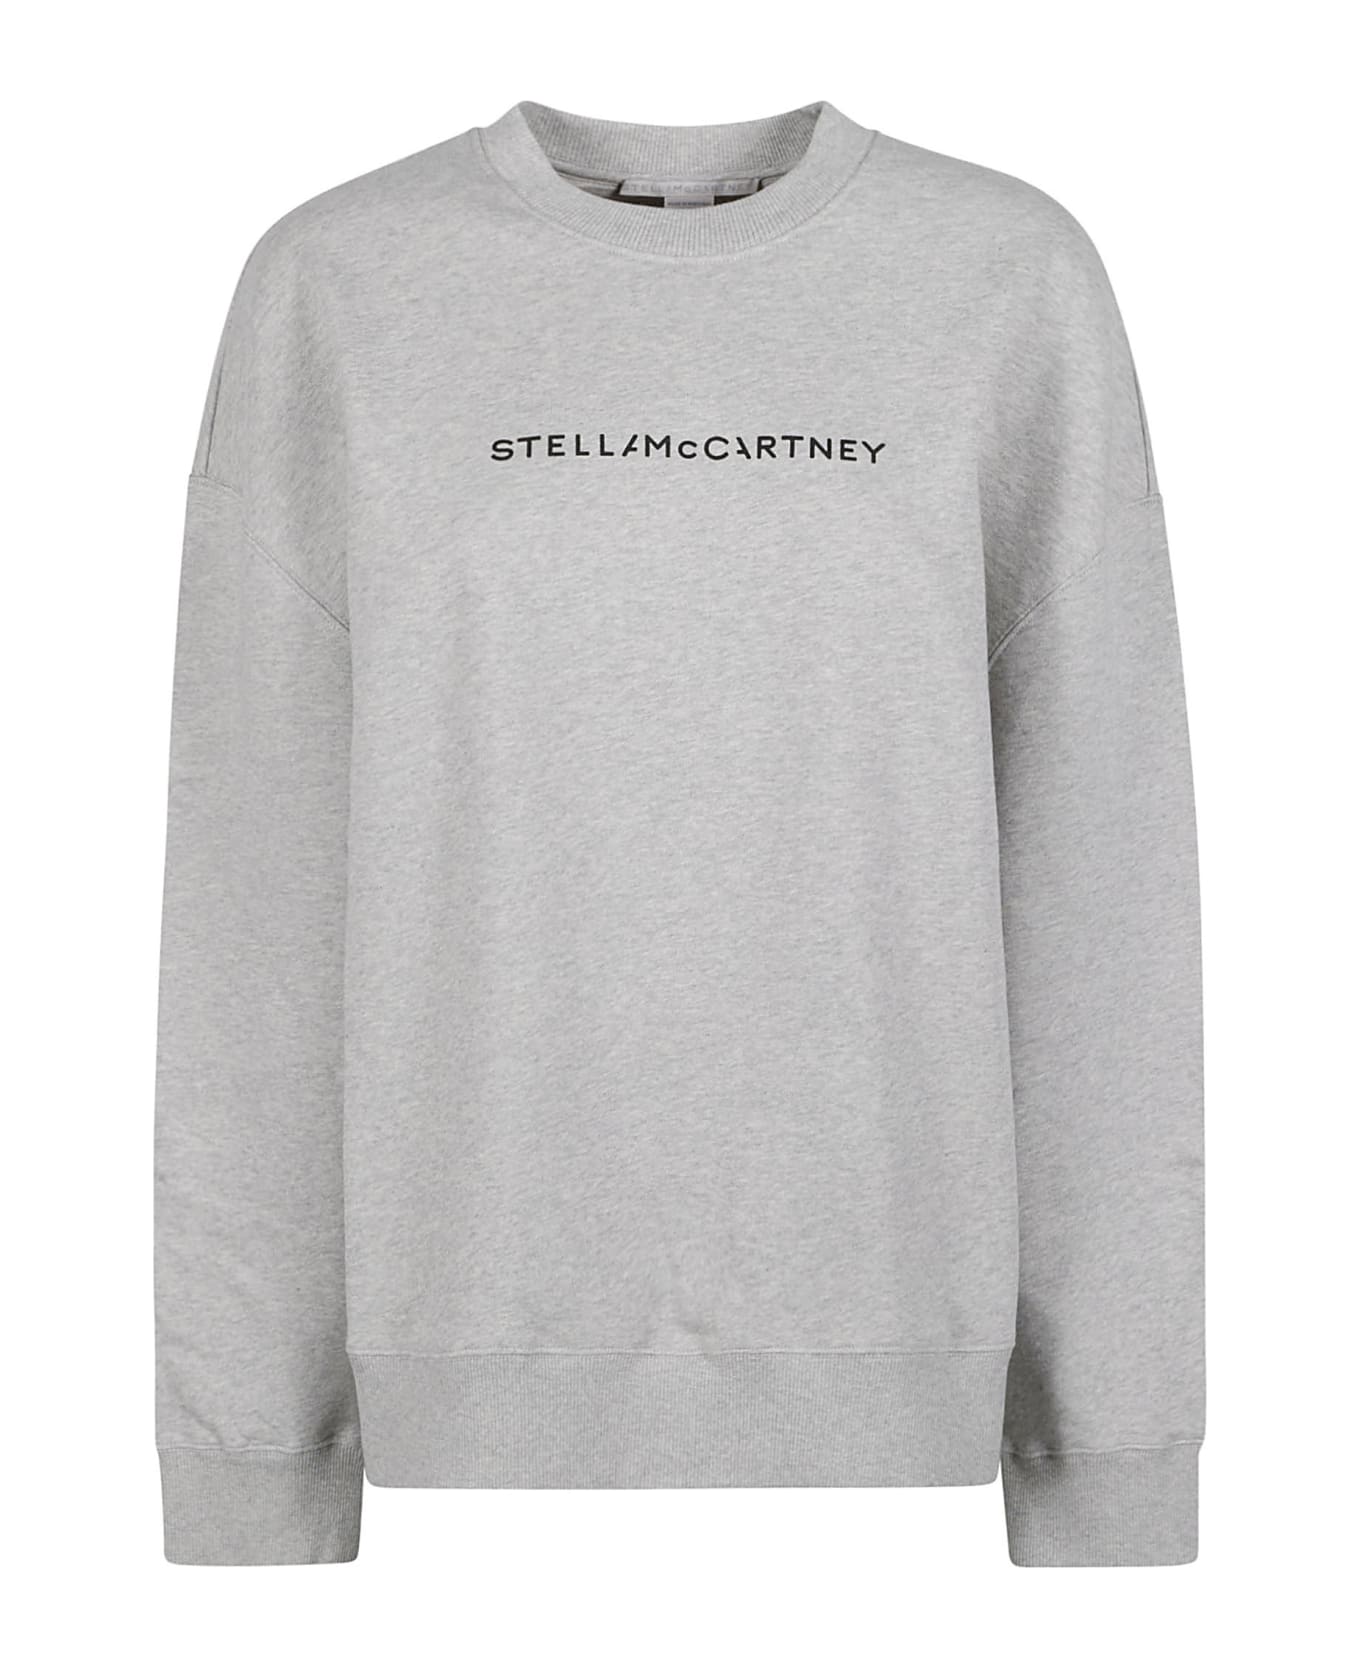 Stella McCartney Iconic Stella Sweatshirt - Grey